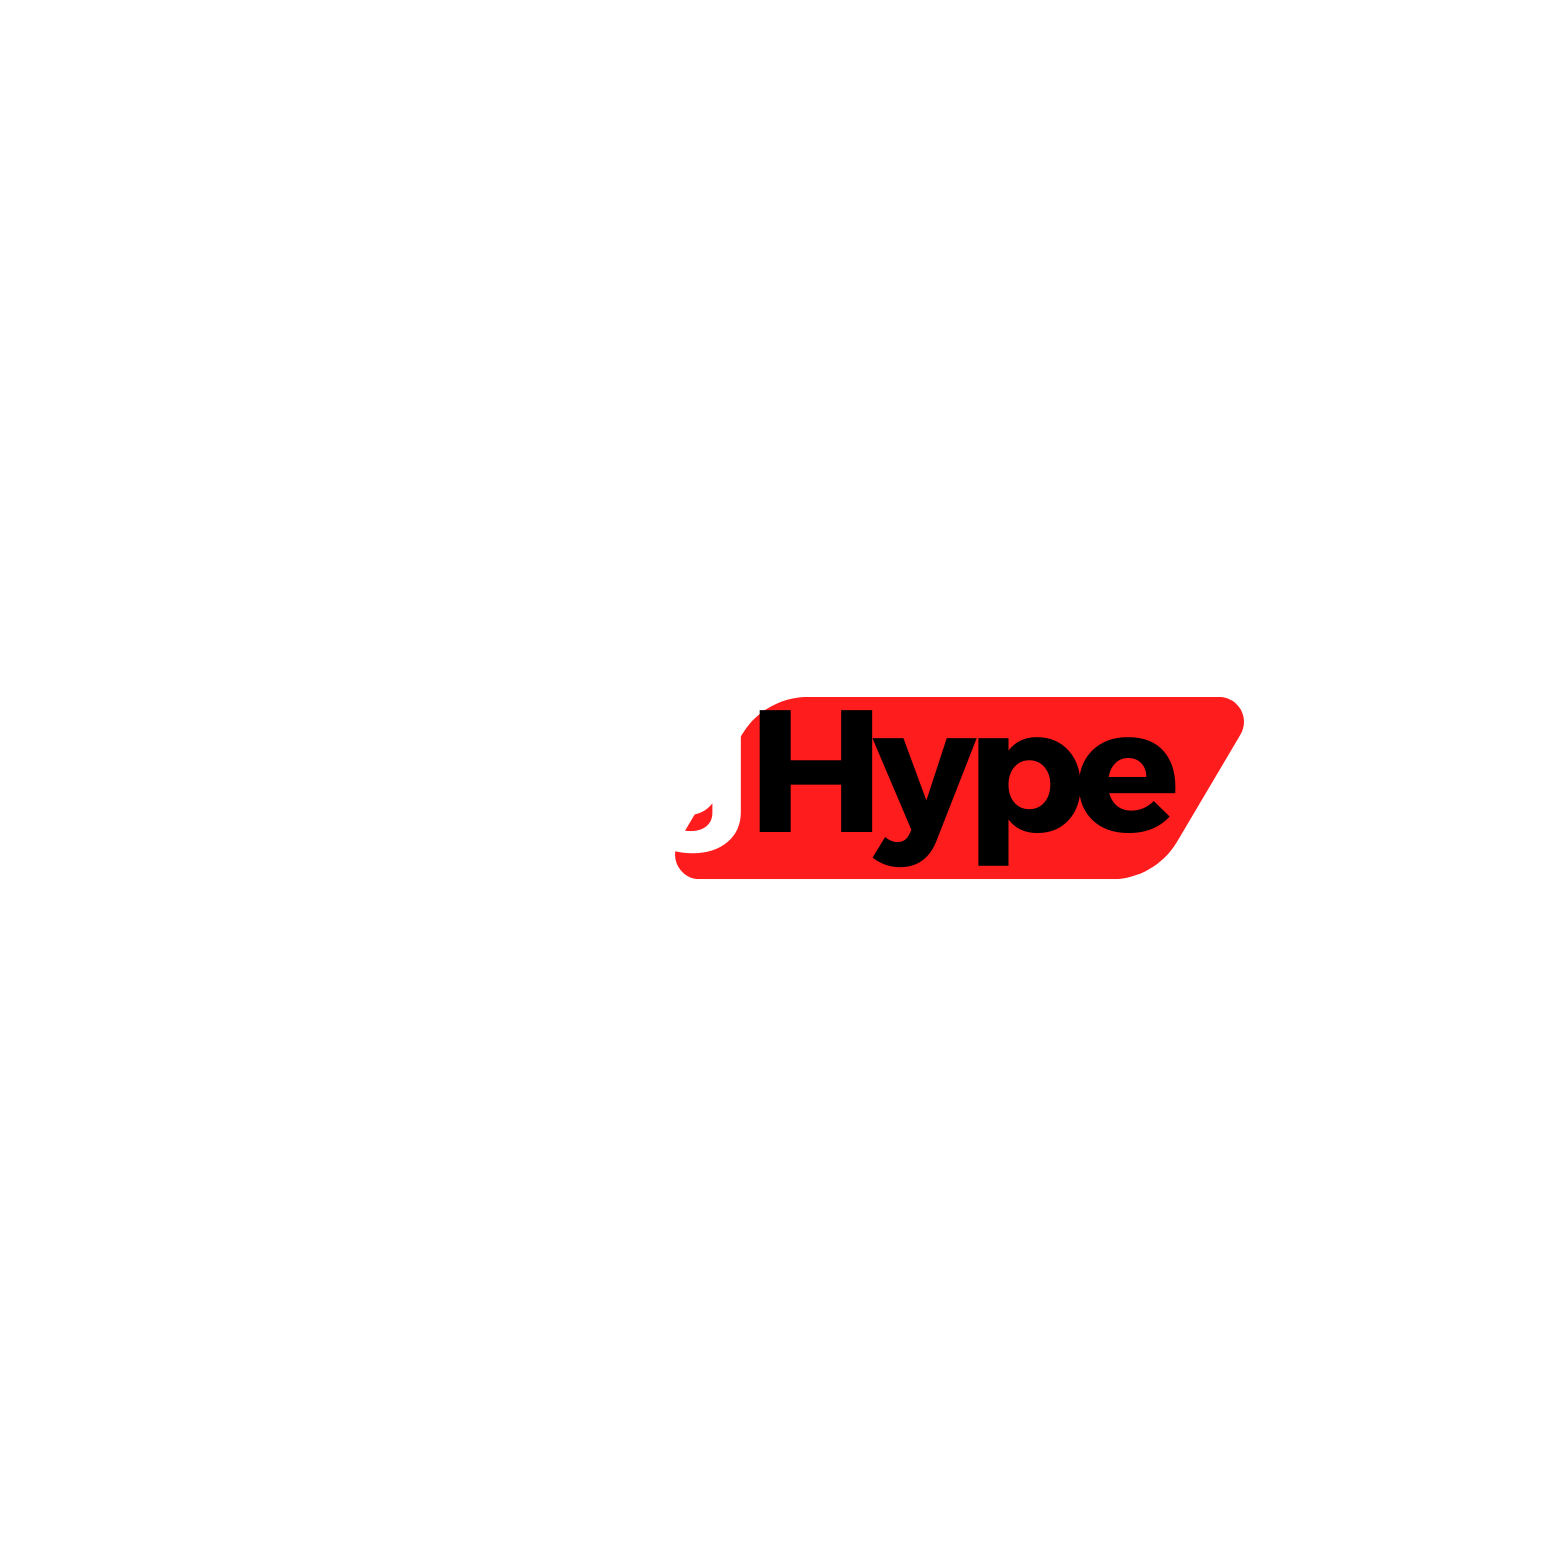 Rolling Hype